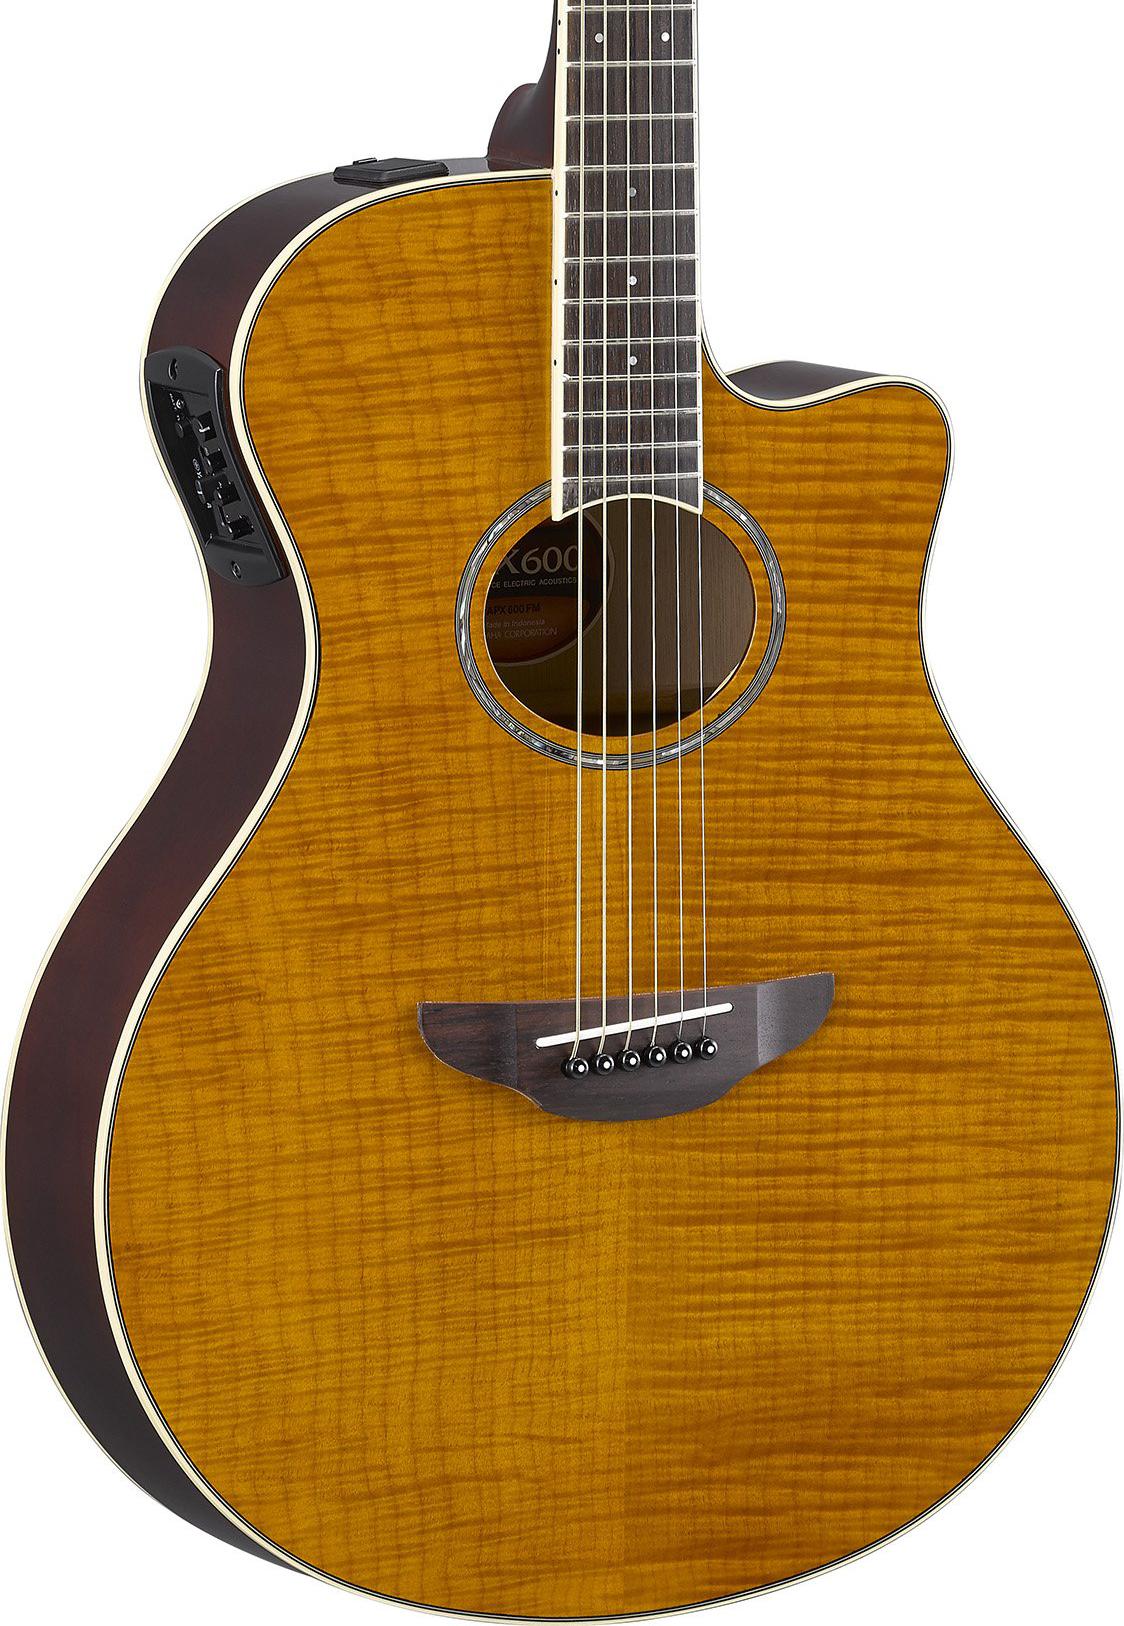 Yamaha APX600 Thin-Line Acoustic Guitar w/ Cutaway & Pickup (Natural)